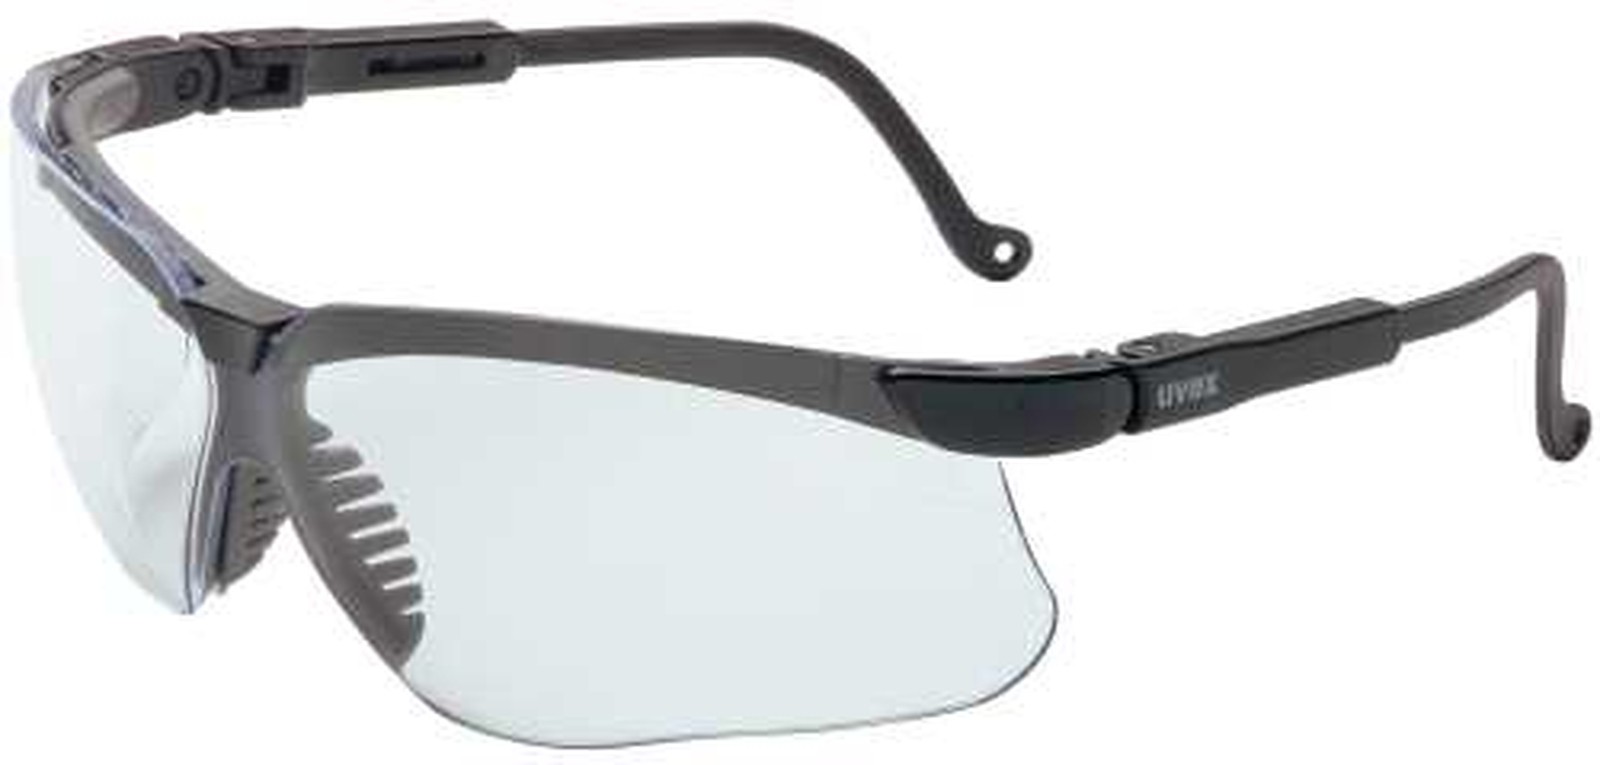 Genesis Wraparound Safety Glasses, Black Plastic Frame, Clear Lens